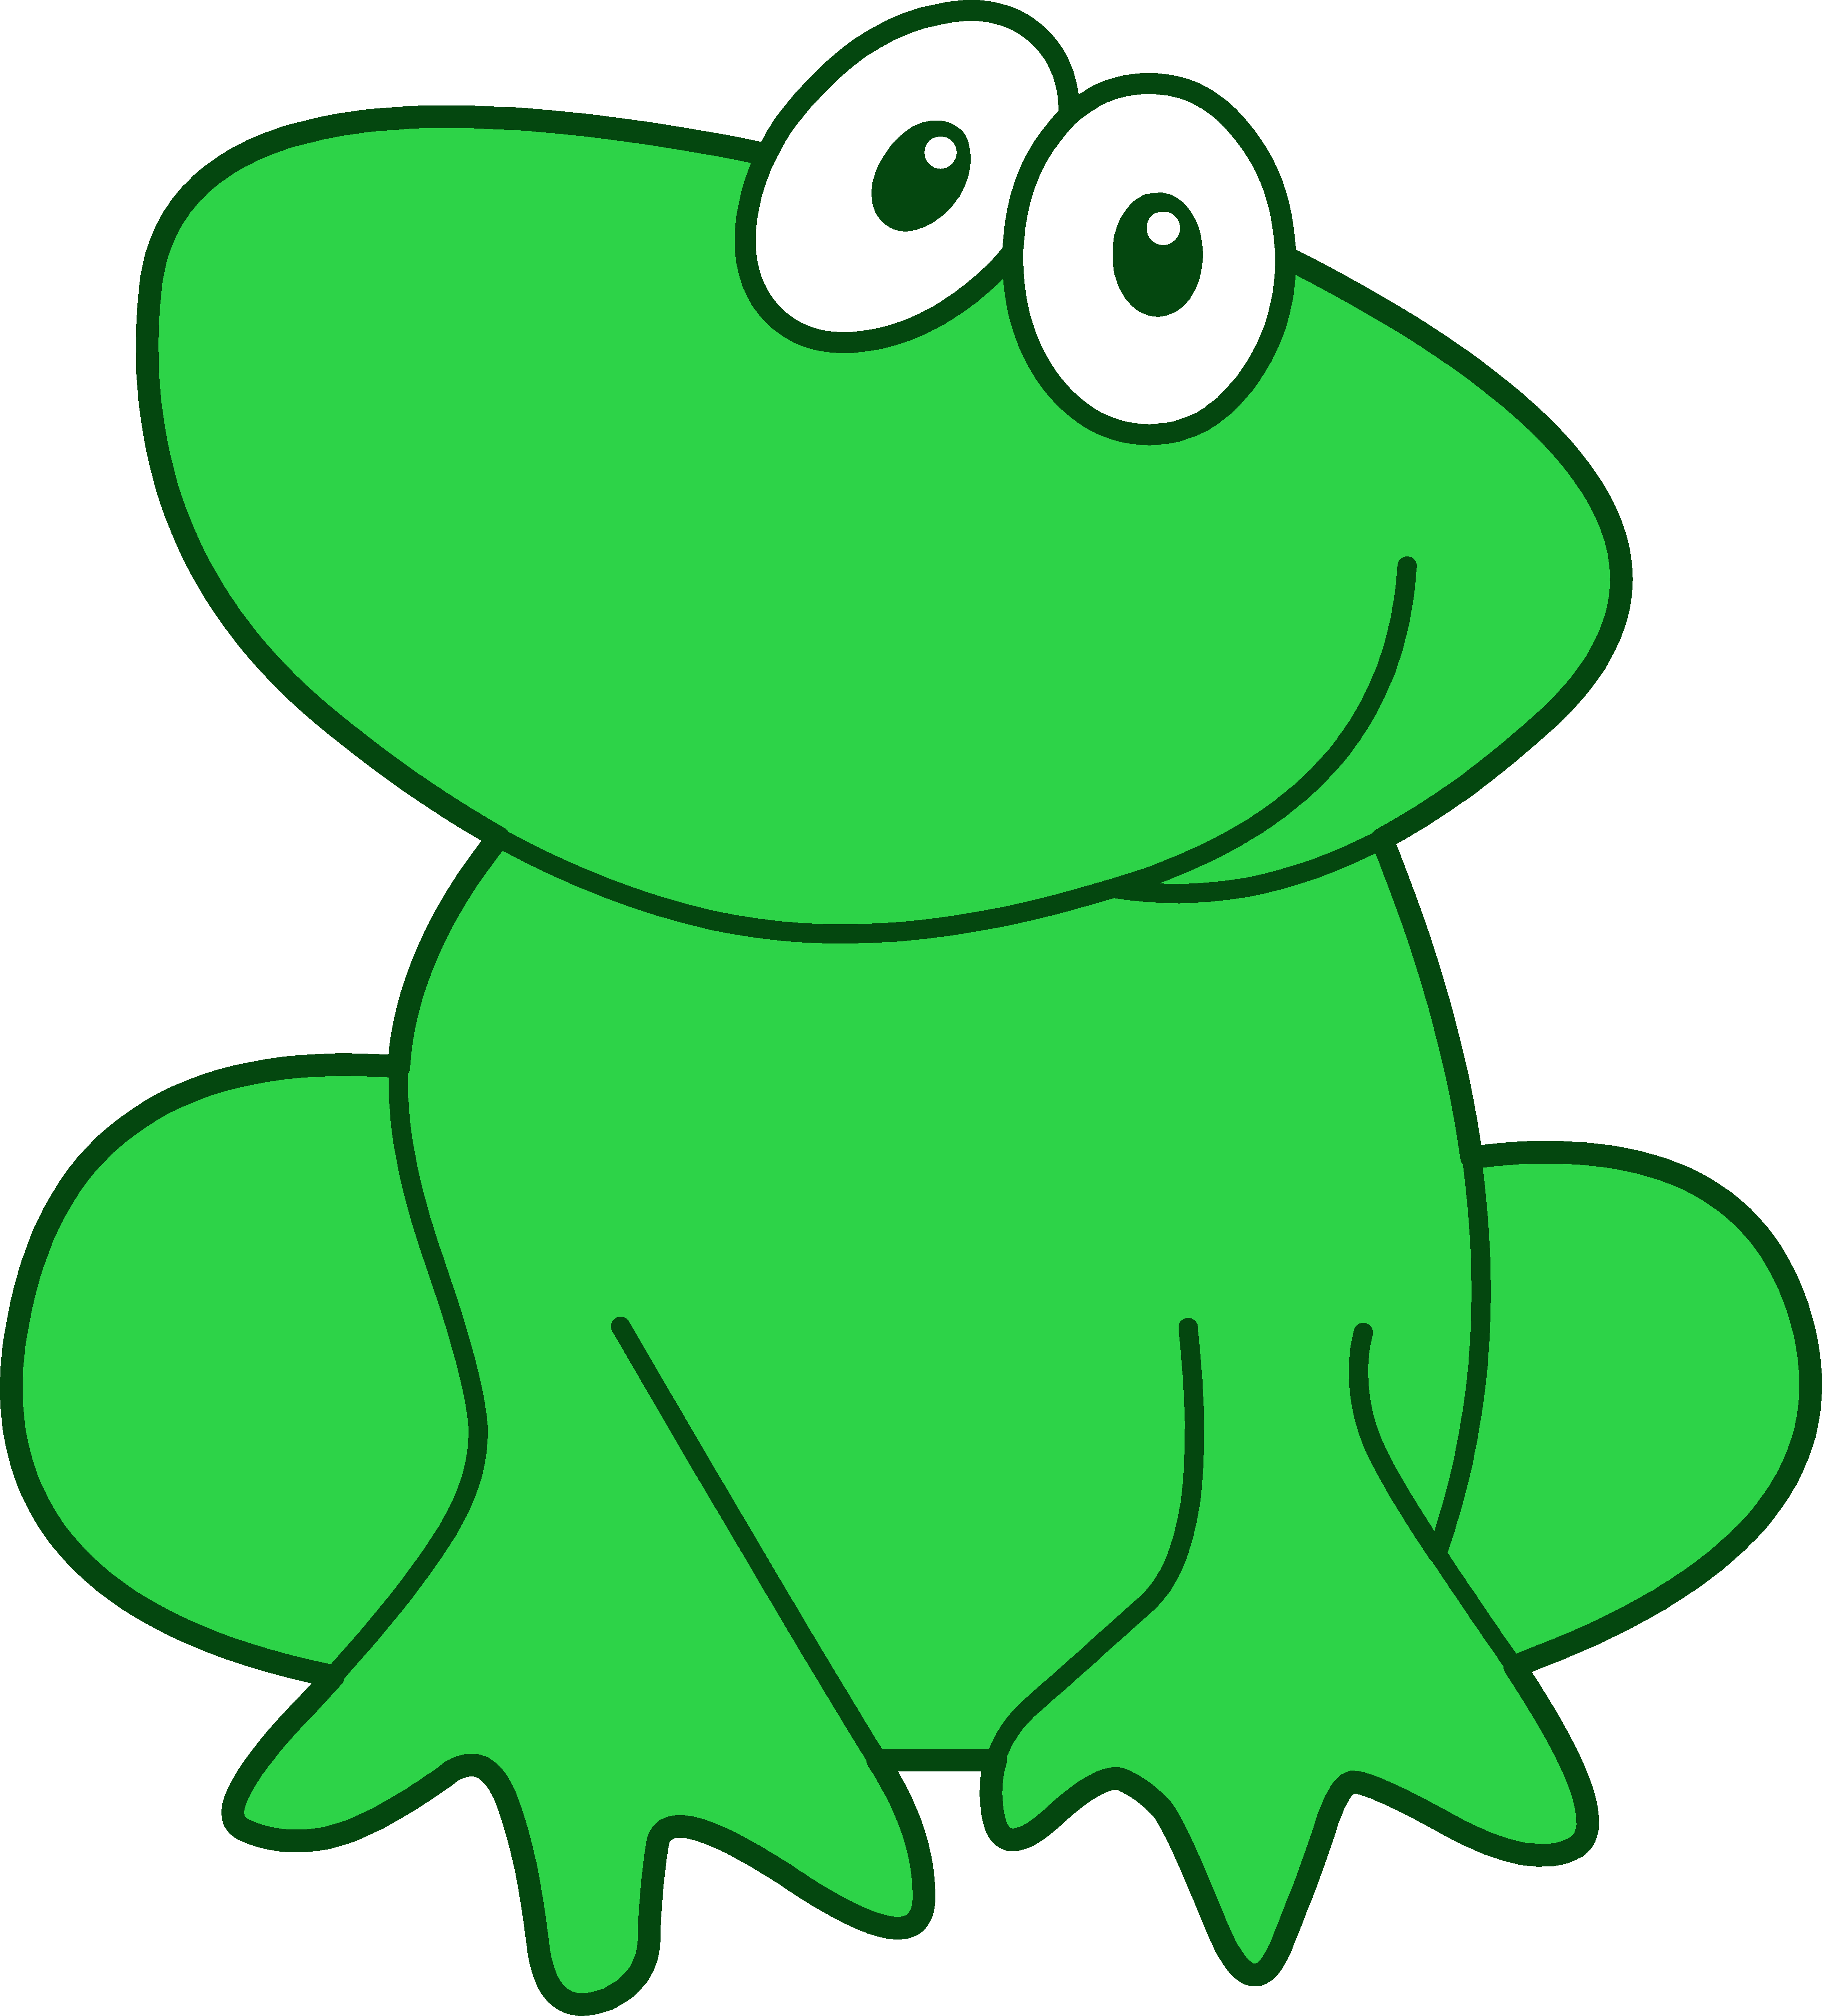 Free Frog Cartoon Cliparts, Download Free Frog Cartoon Cliparts png